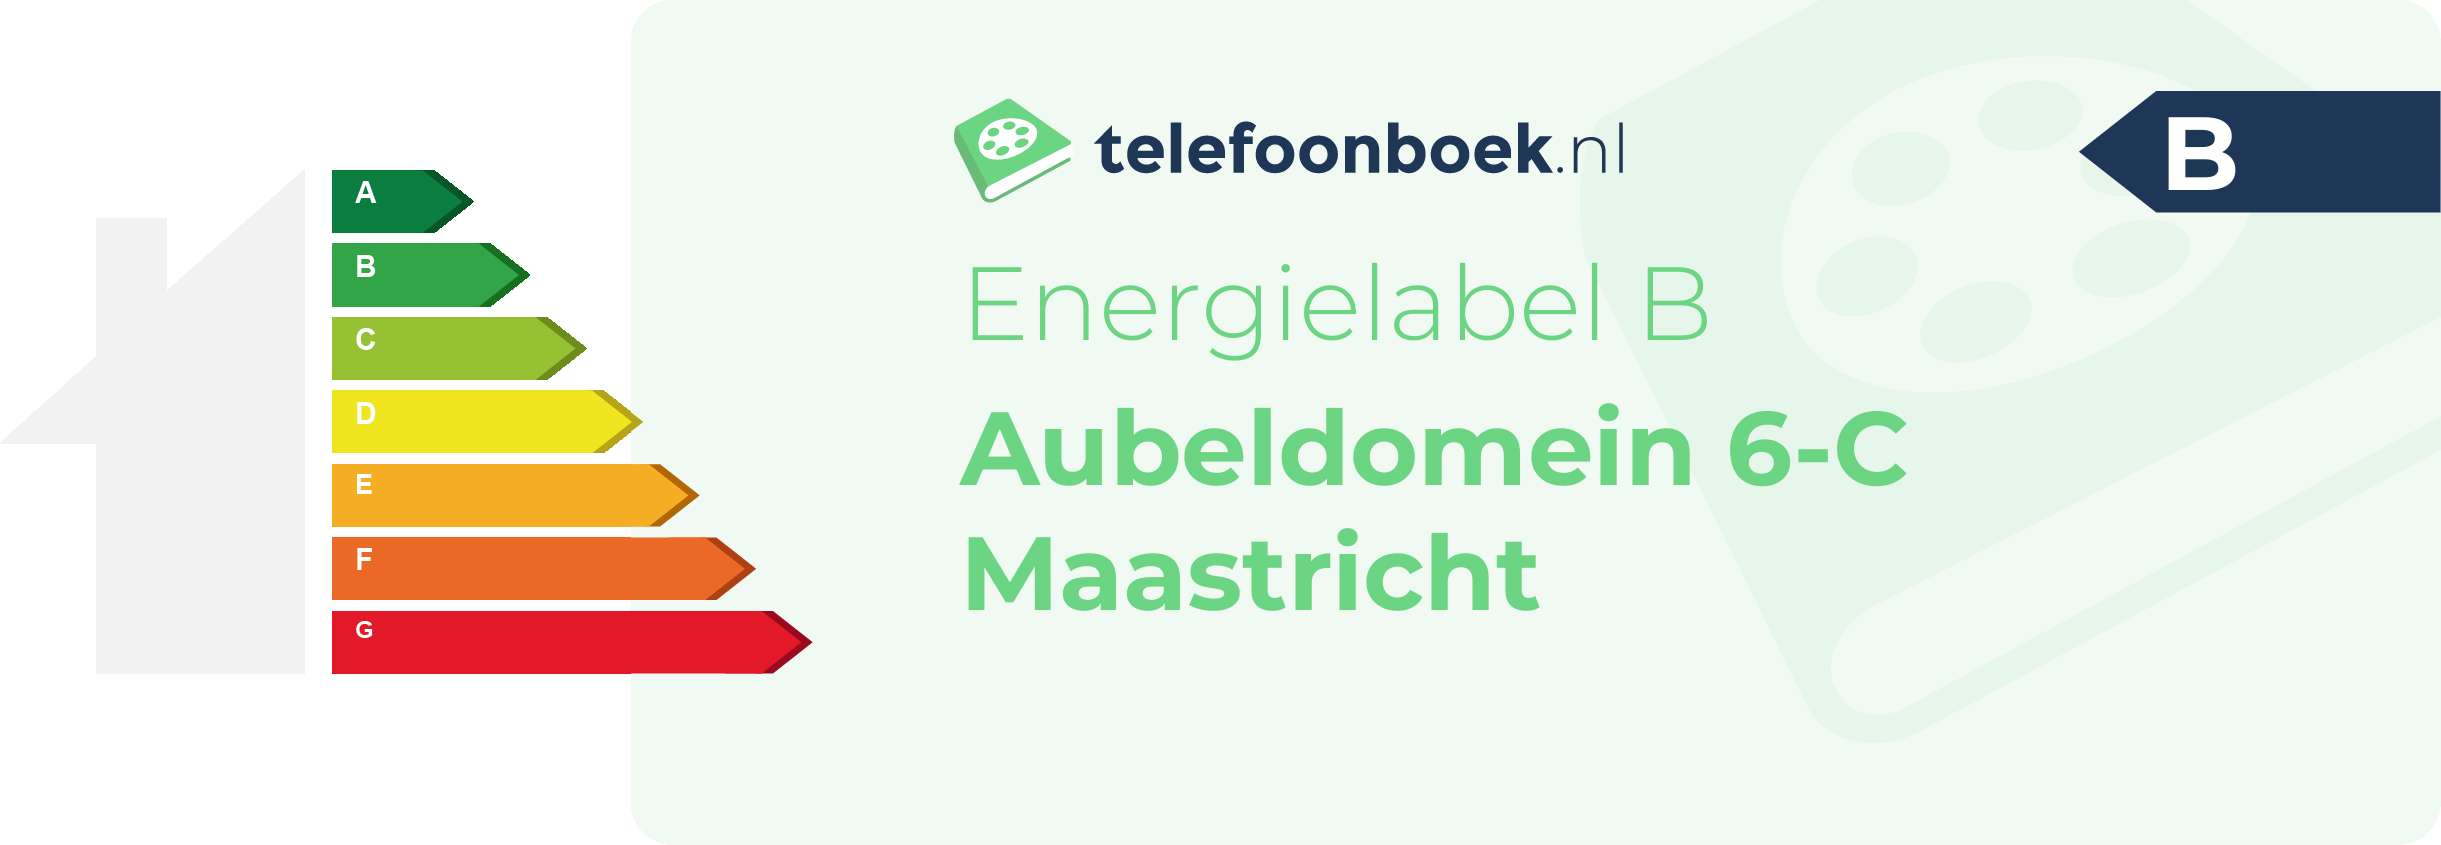 Energielabel Aubeldomein 6-C Maastricht